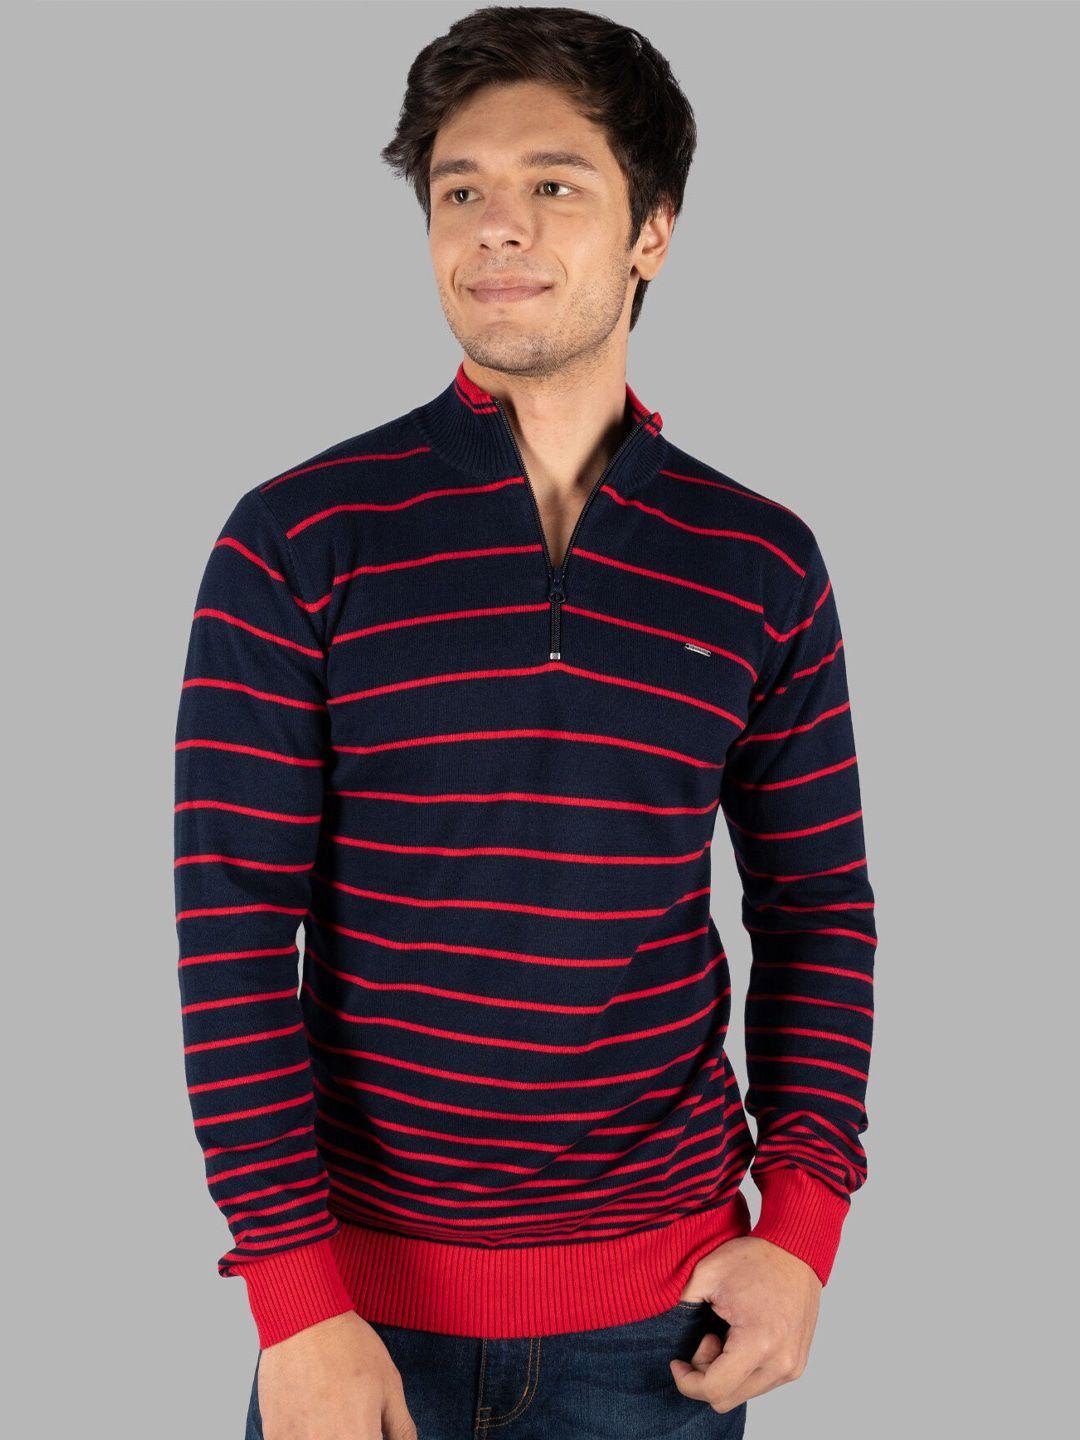 tim paris striped mock collar long sleeves cotton pullover sweater